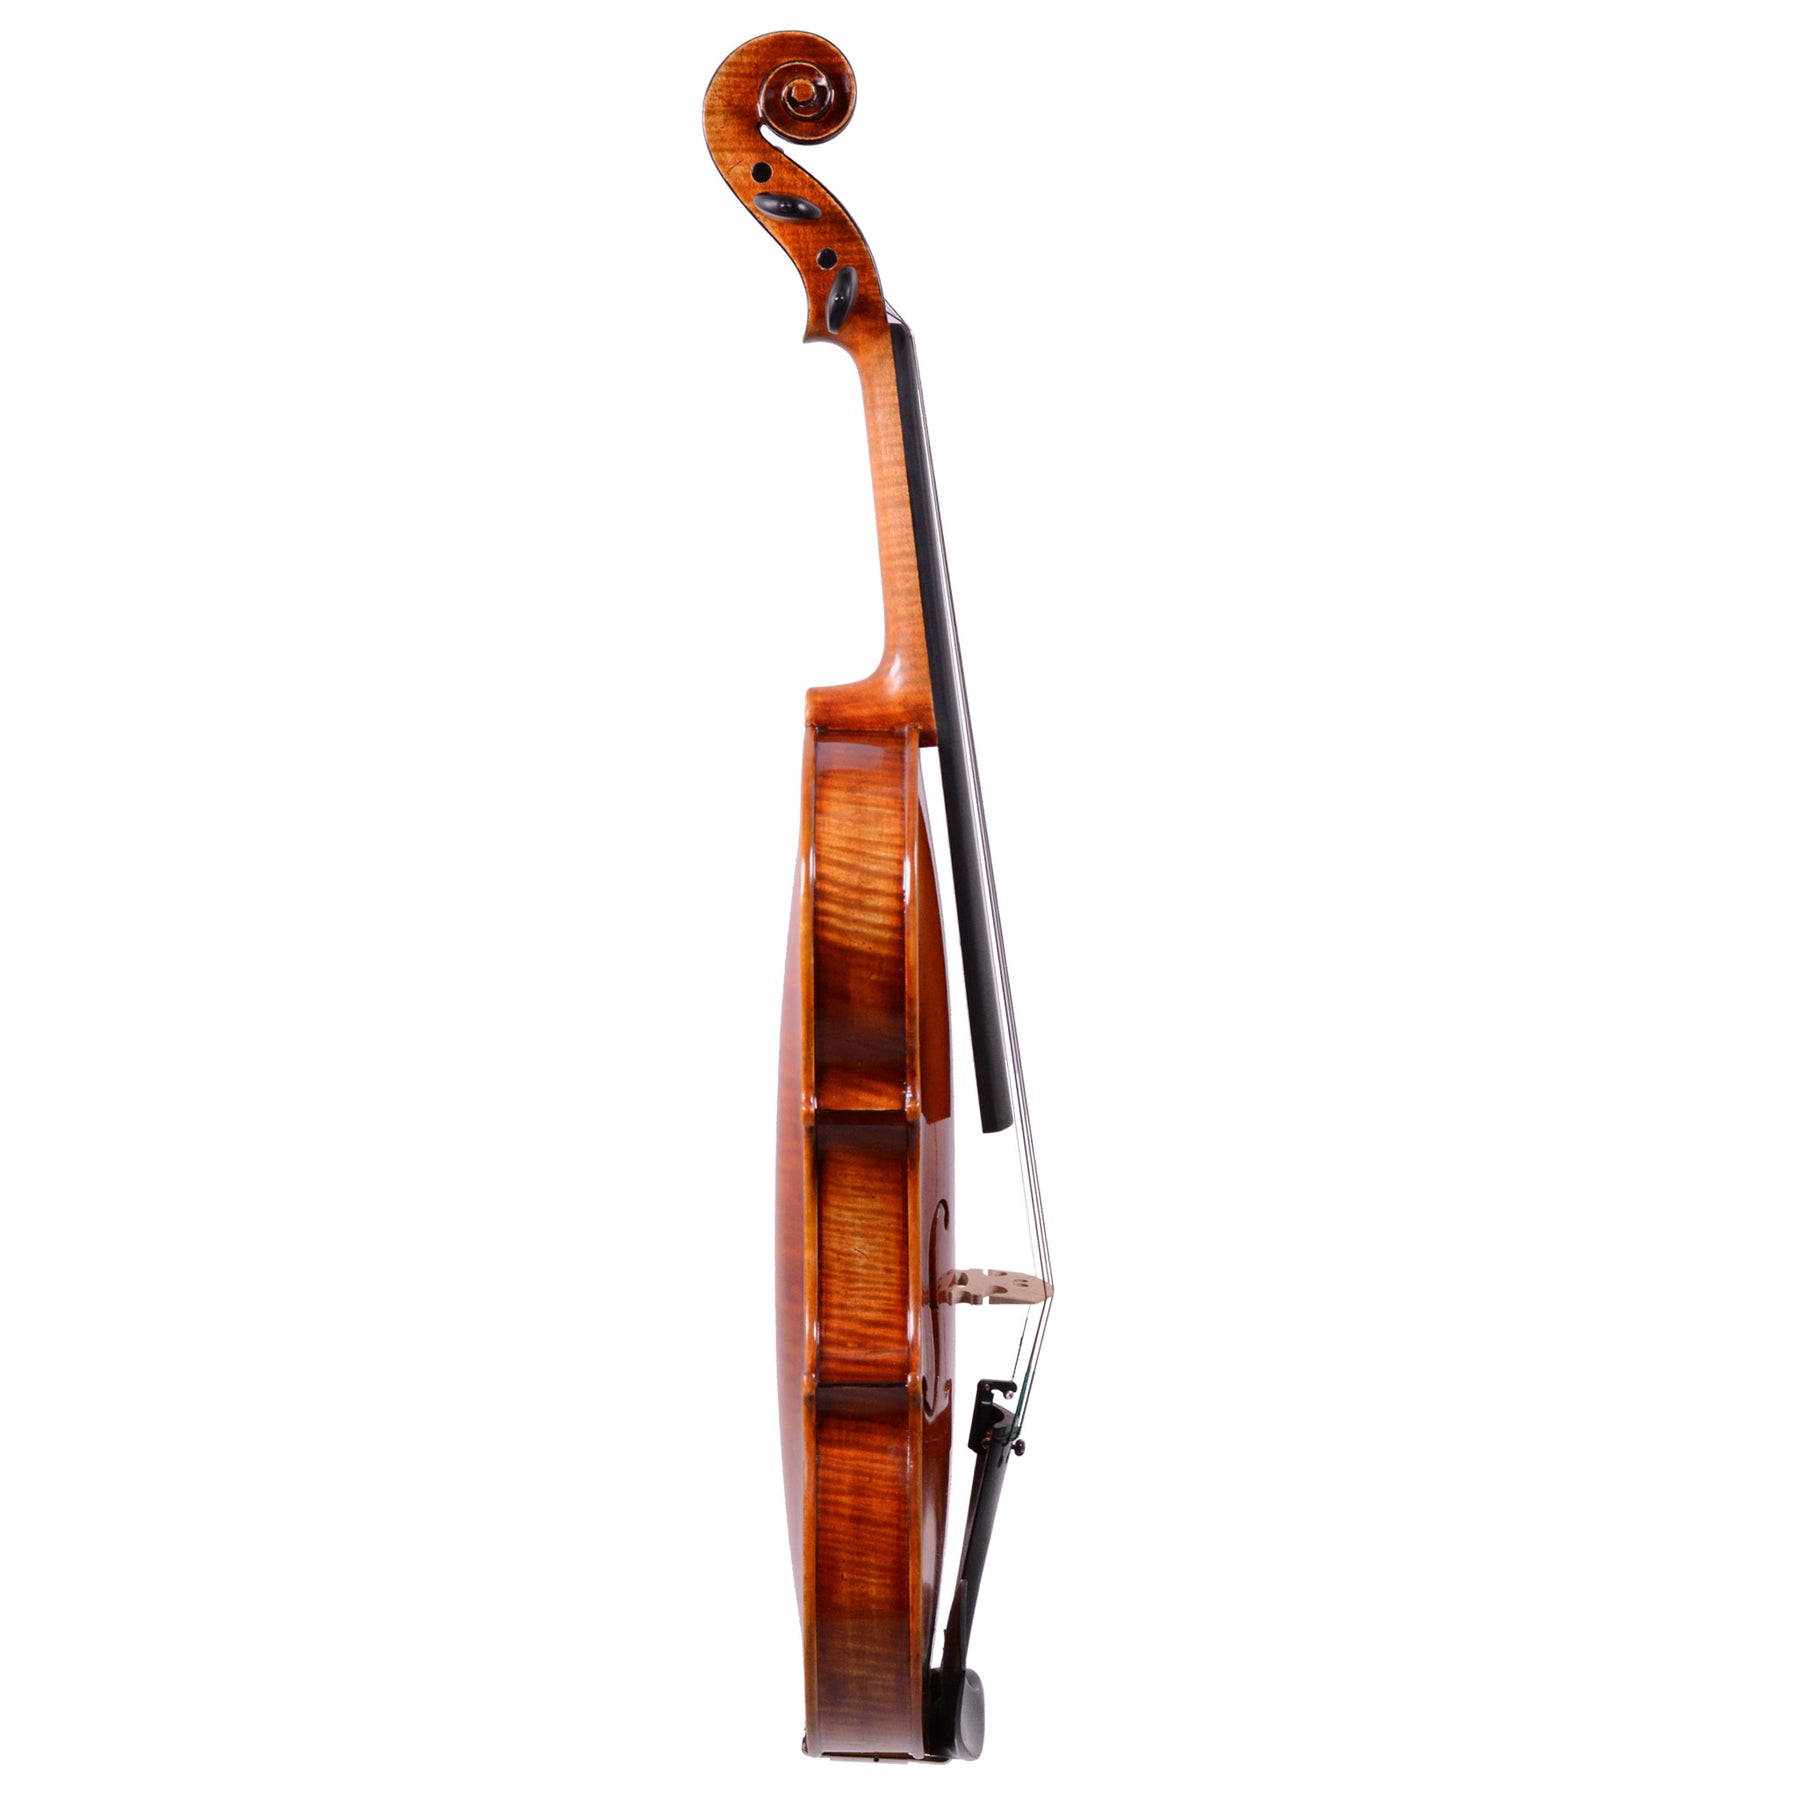 Holstein Traditional Soil Stradivarius Violin